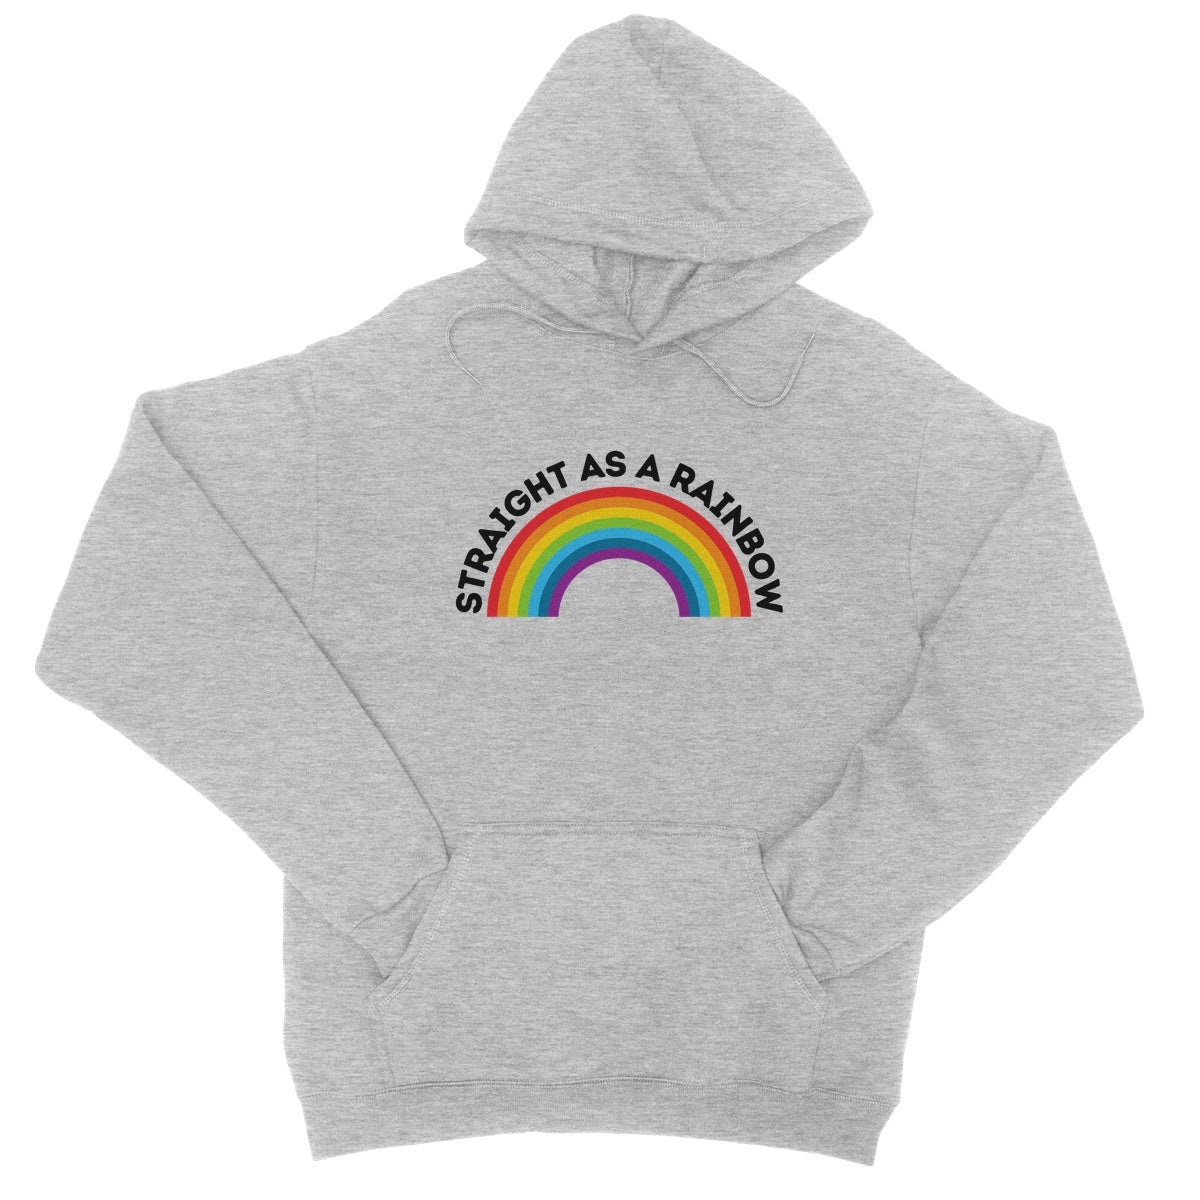 straight as a rainbow hoodie grey